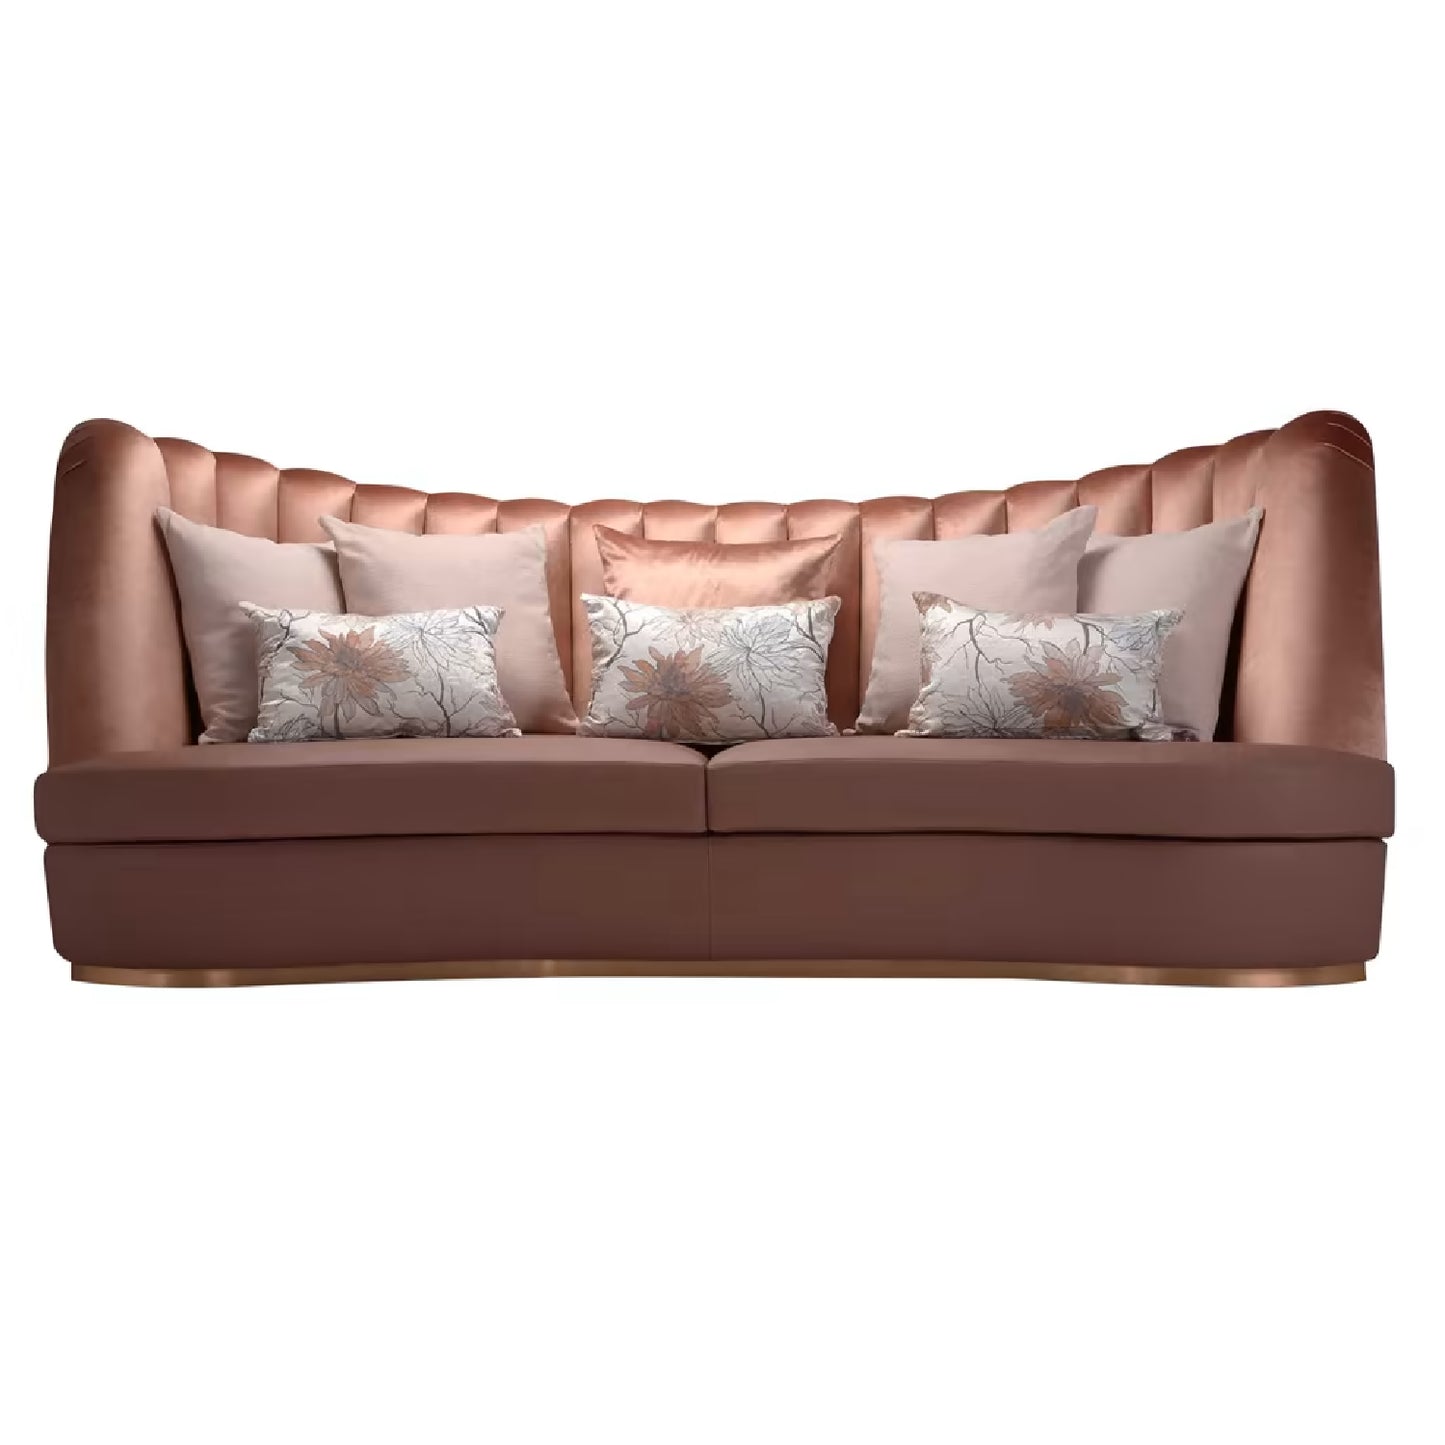 Thalia Brown 3-Seater Sofa by Domingo Salotti